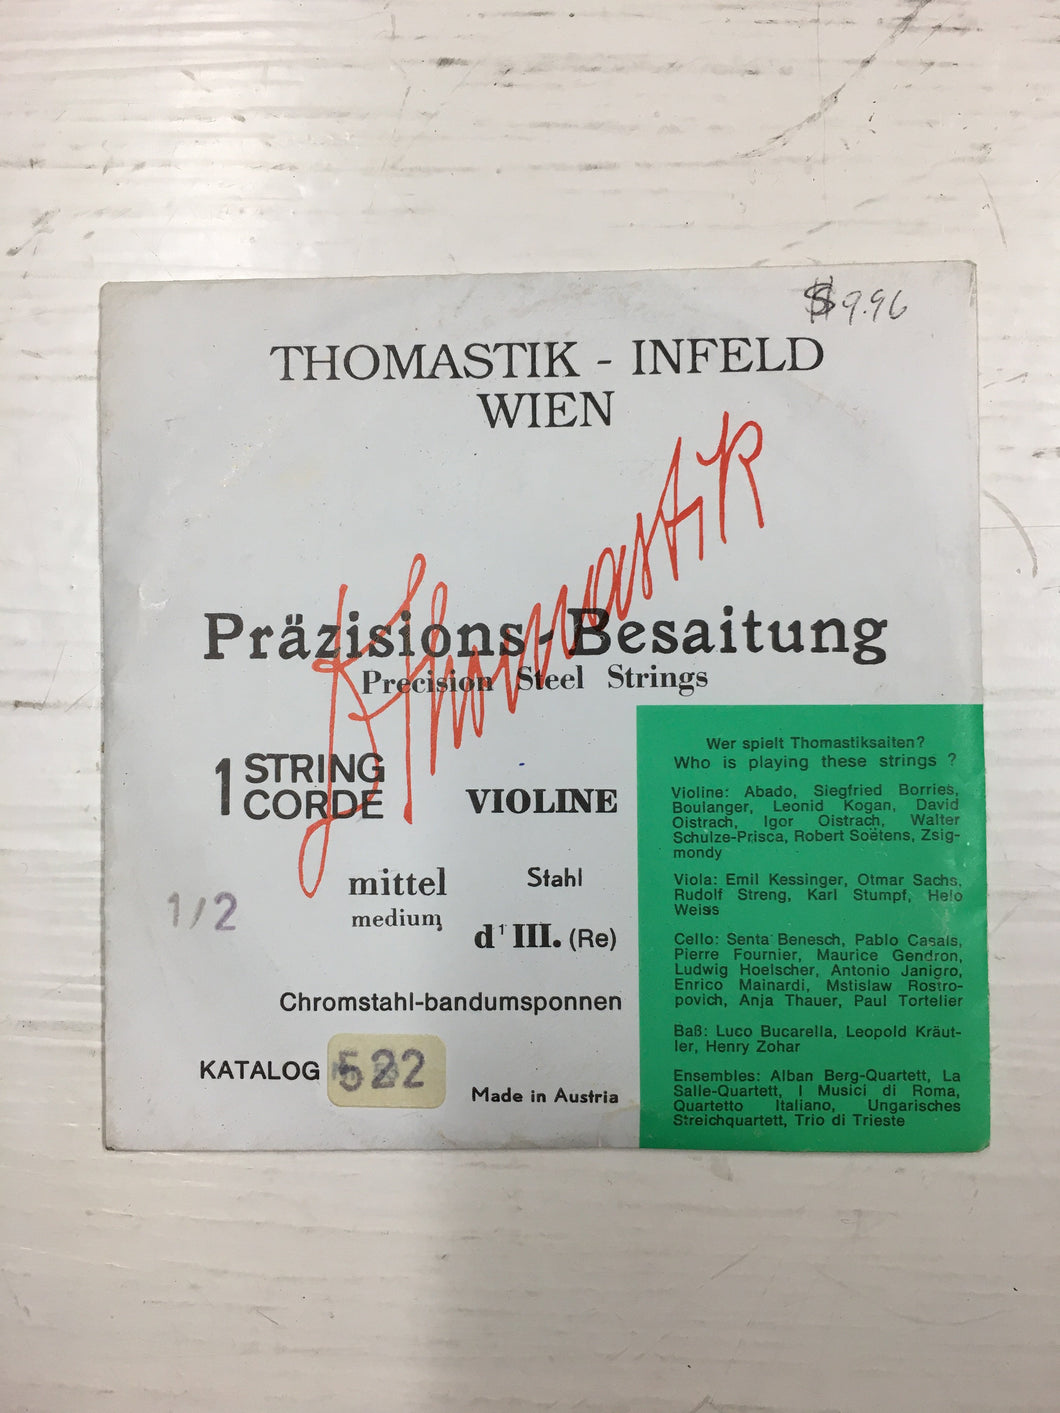 Violin D String 1/2 - Thomasik- Infeld Wien